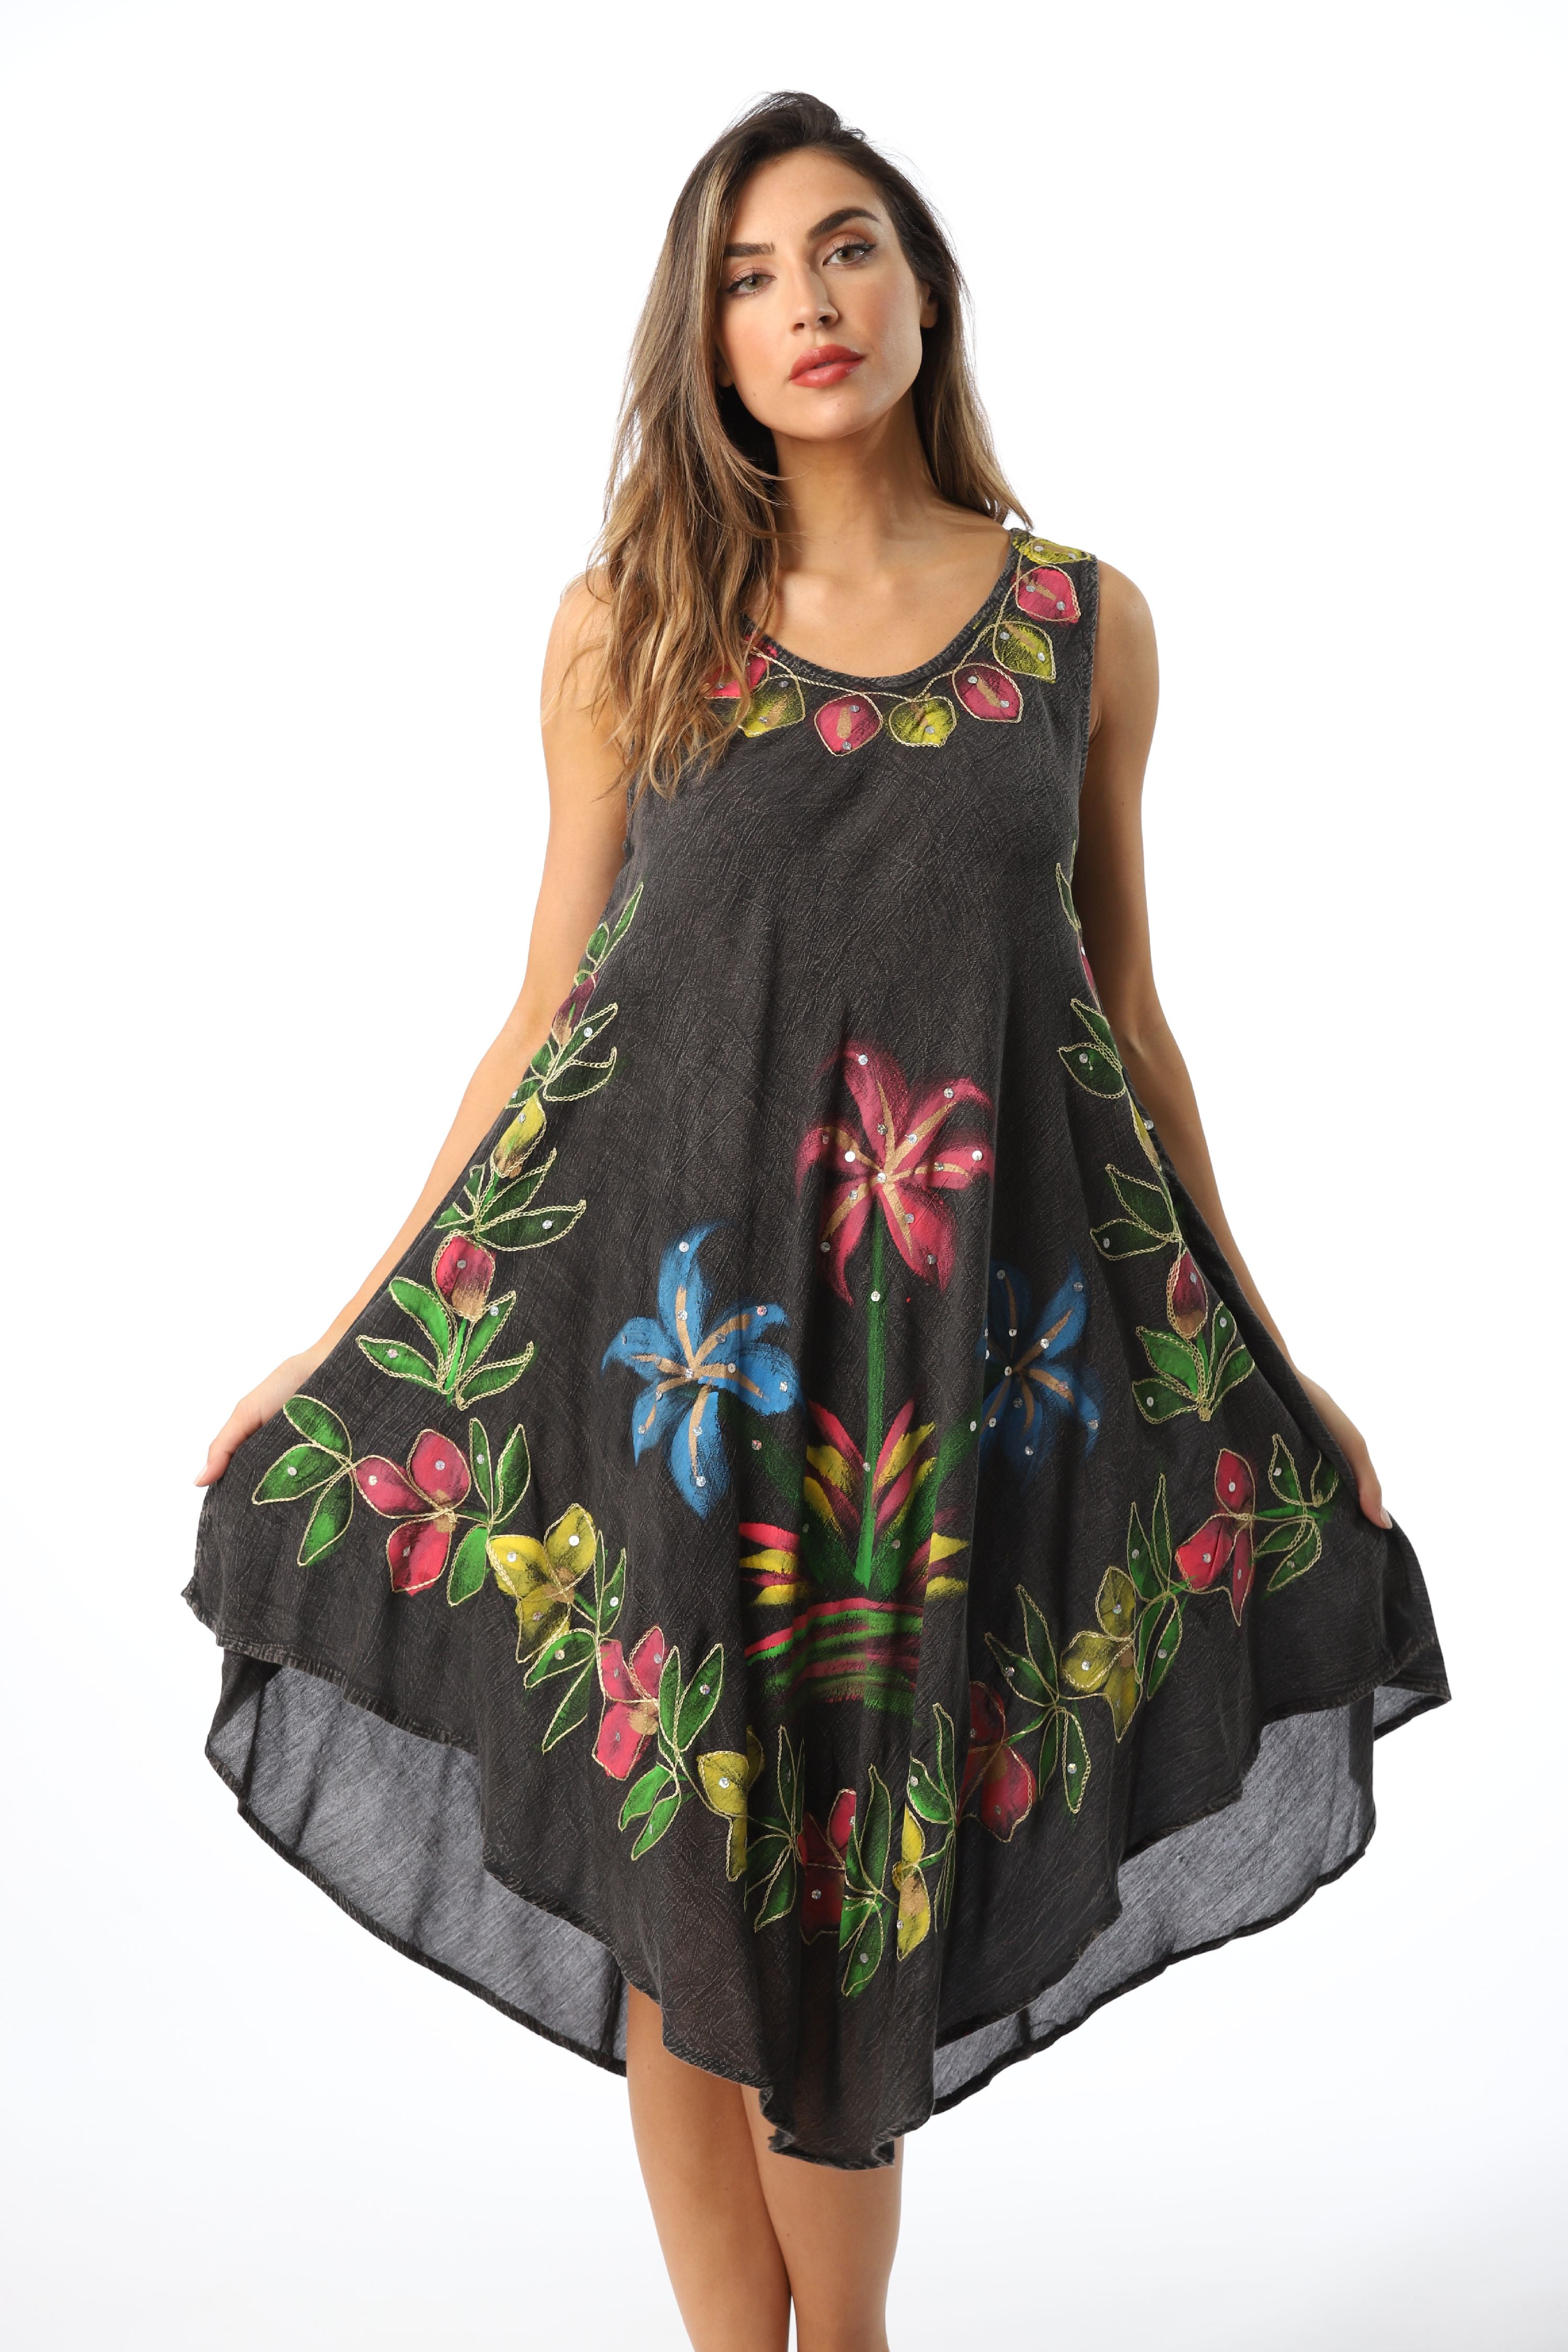 Riviera Sun Dress Dresses for Women (1X, Black) - Walmart.com